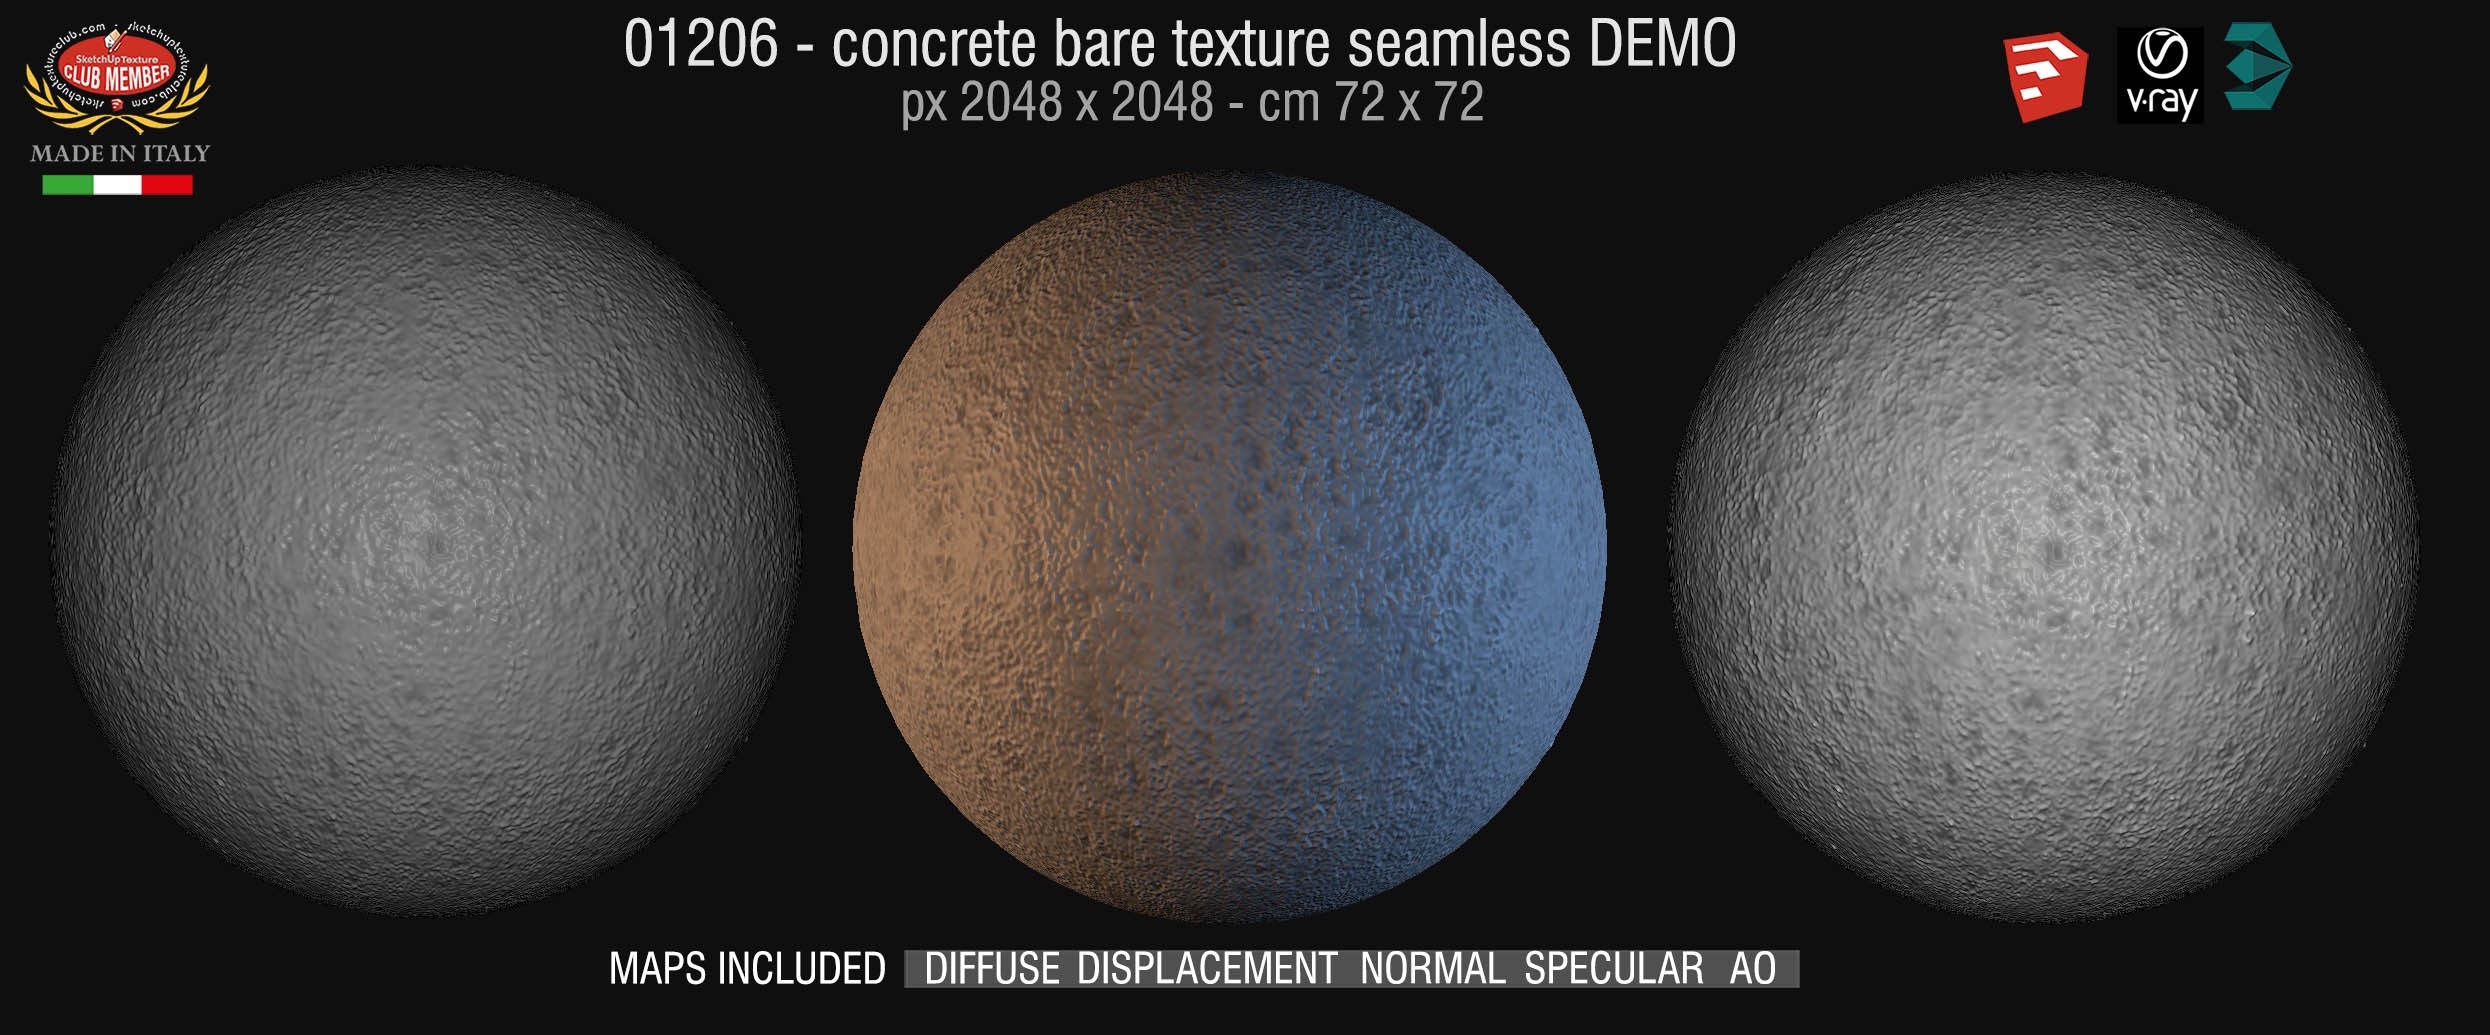 01206 HR Concrete bare clean texture seamless + maps DEMO